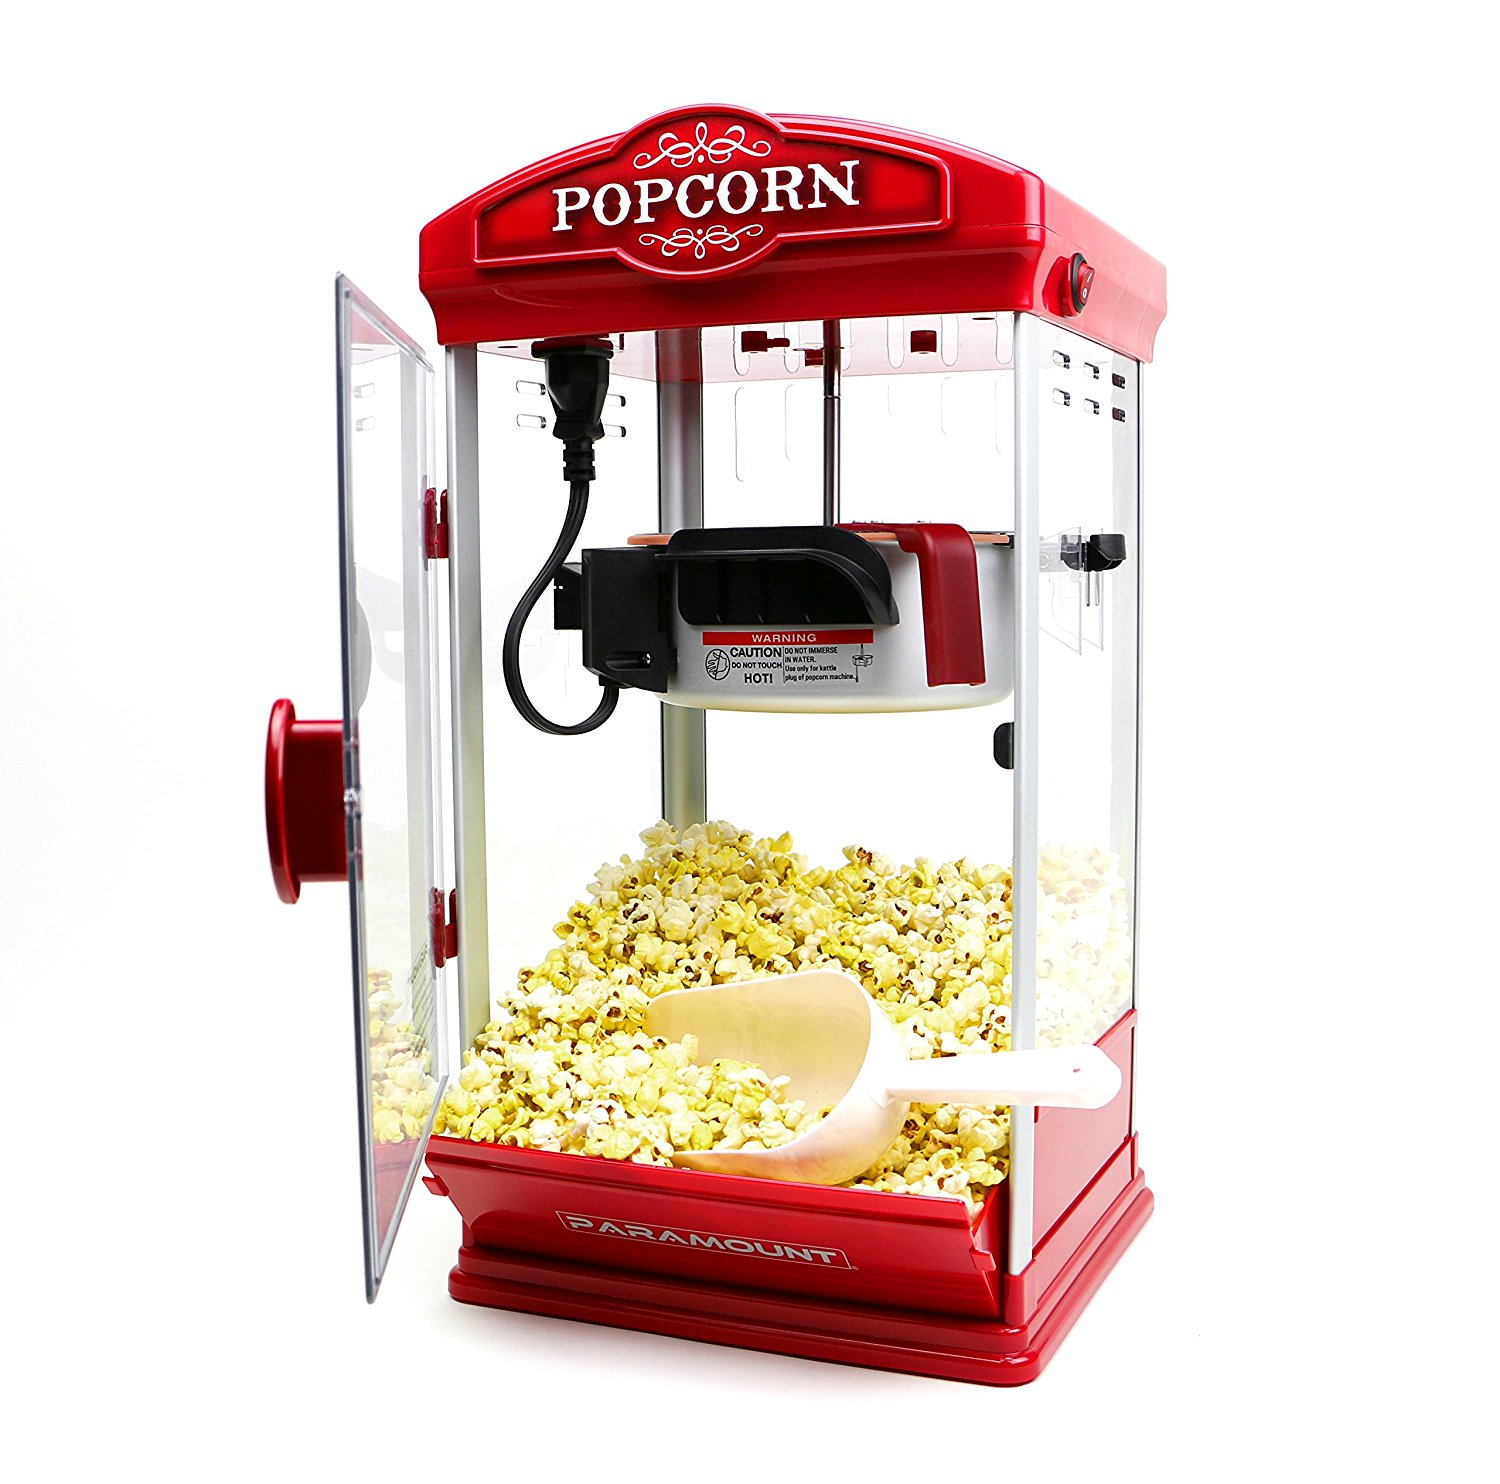 Amazon.com: Popcorn Maker Machine by Paramount - New 8oz Capacity ...